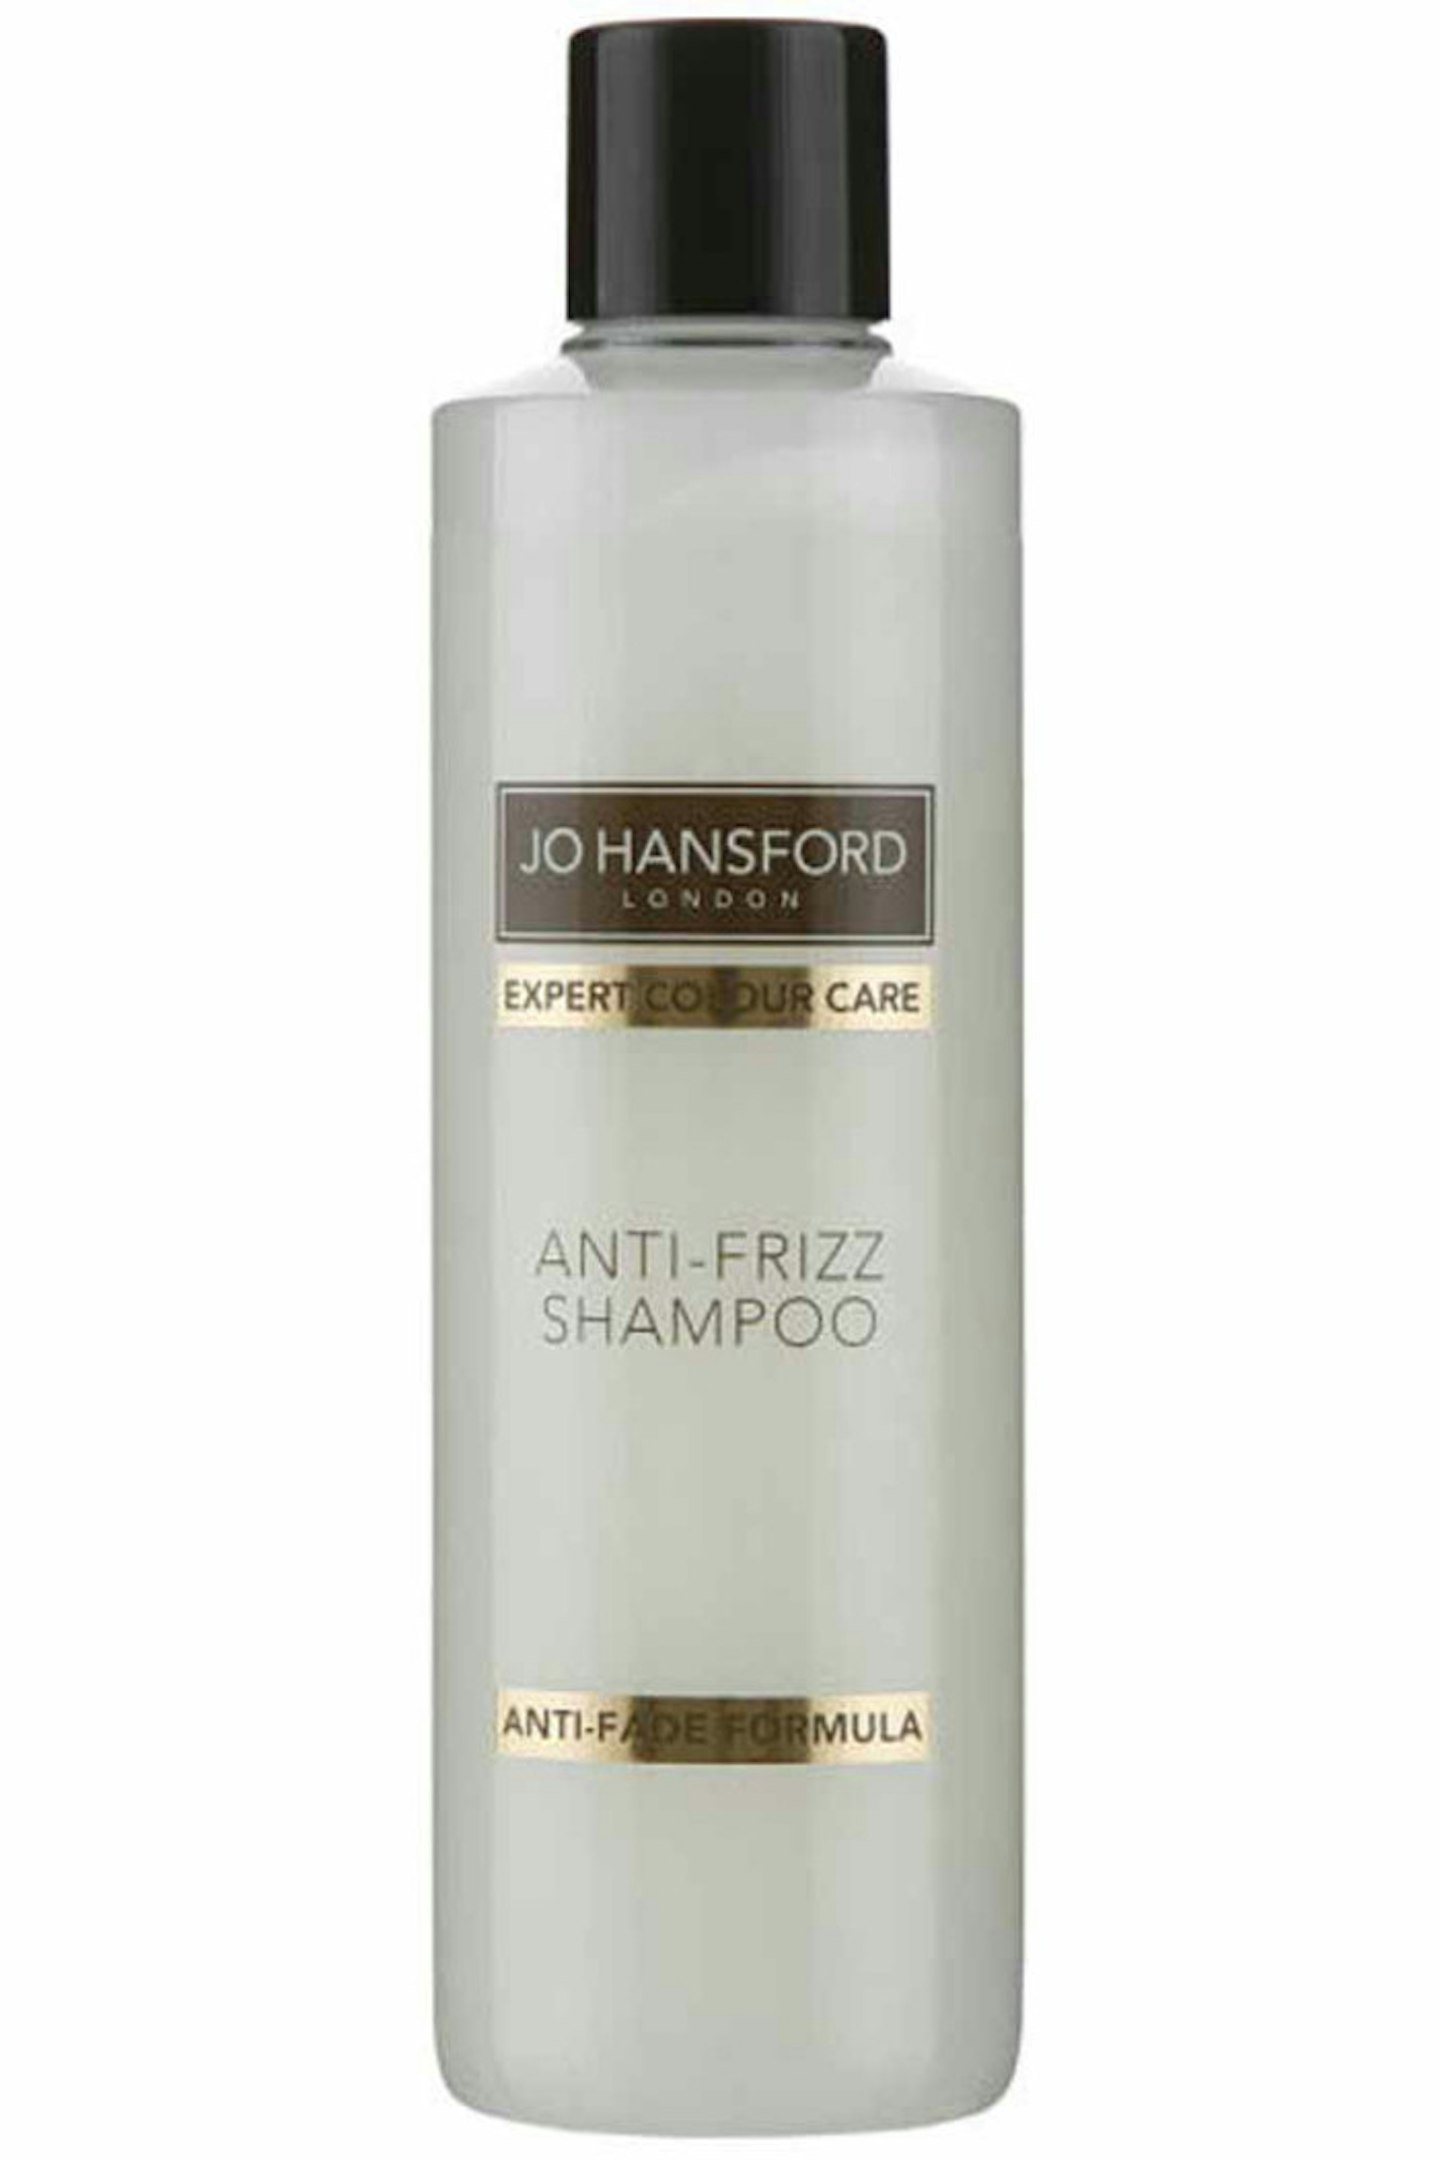 2. Jo Hansford Anti Frizz Shampoo, £16